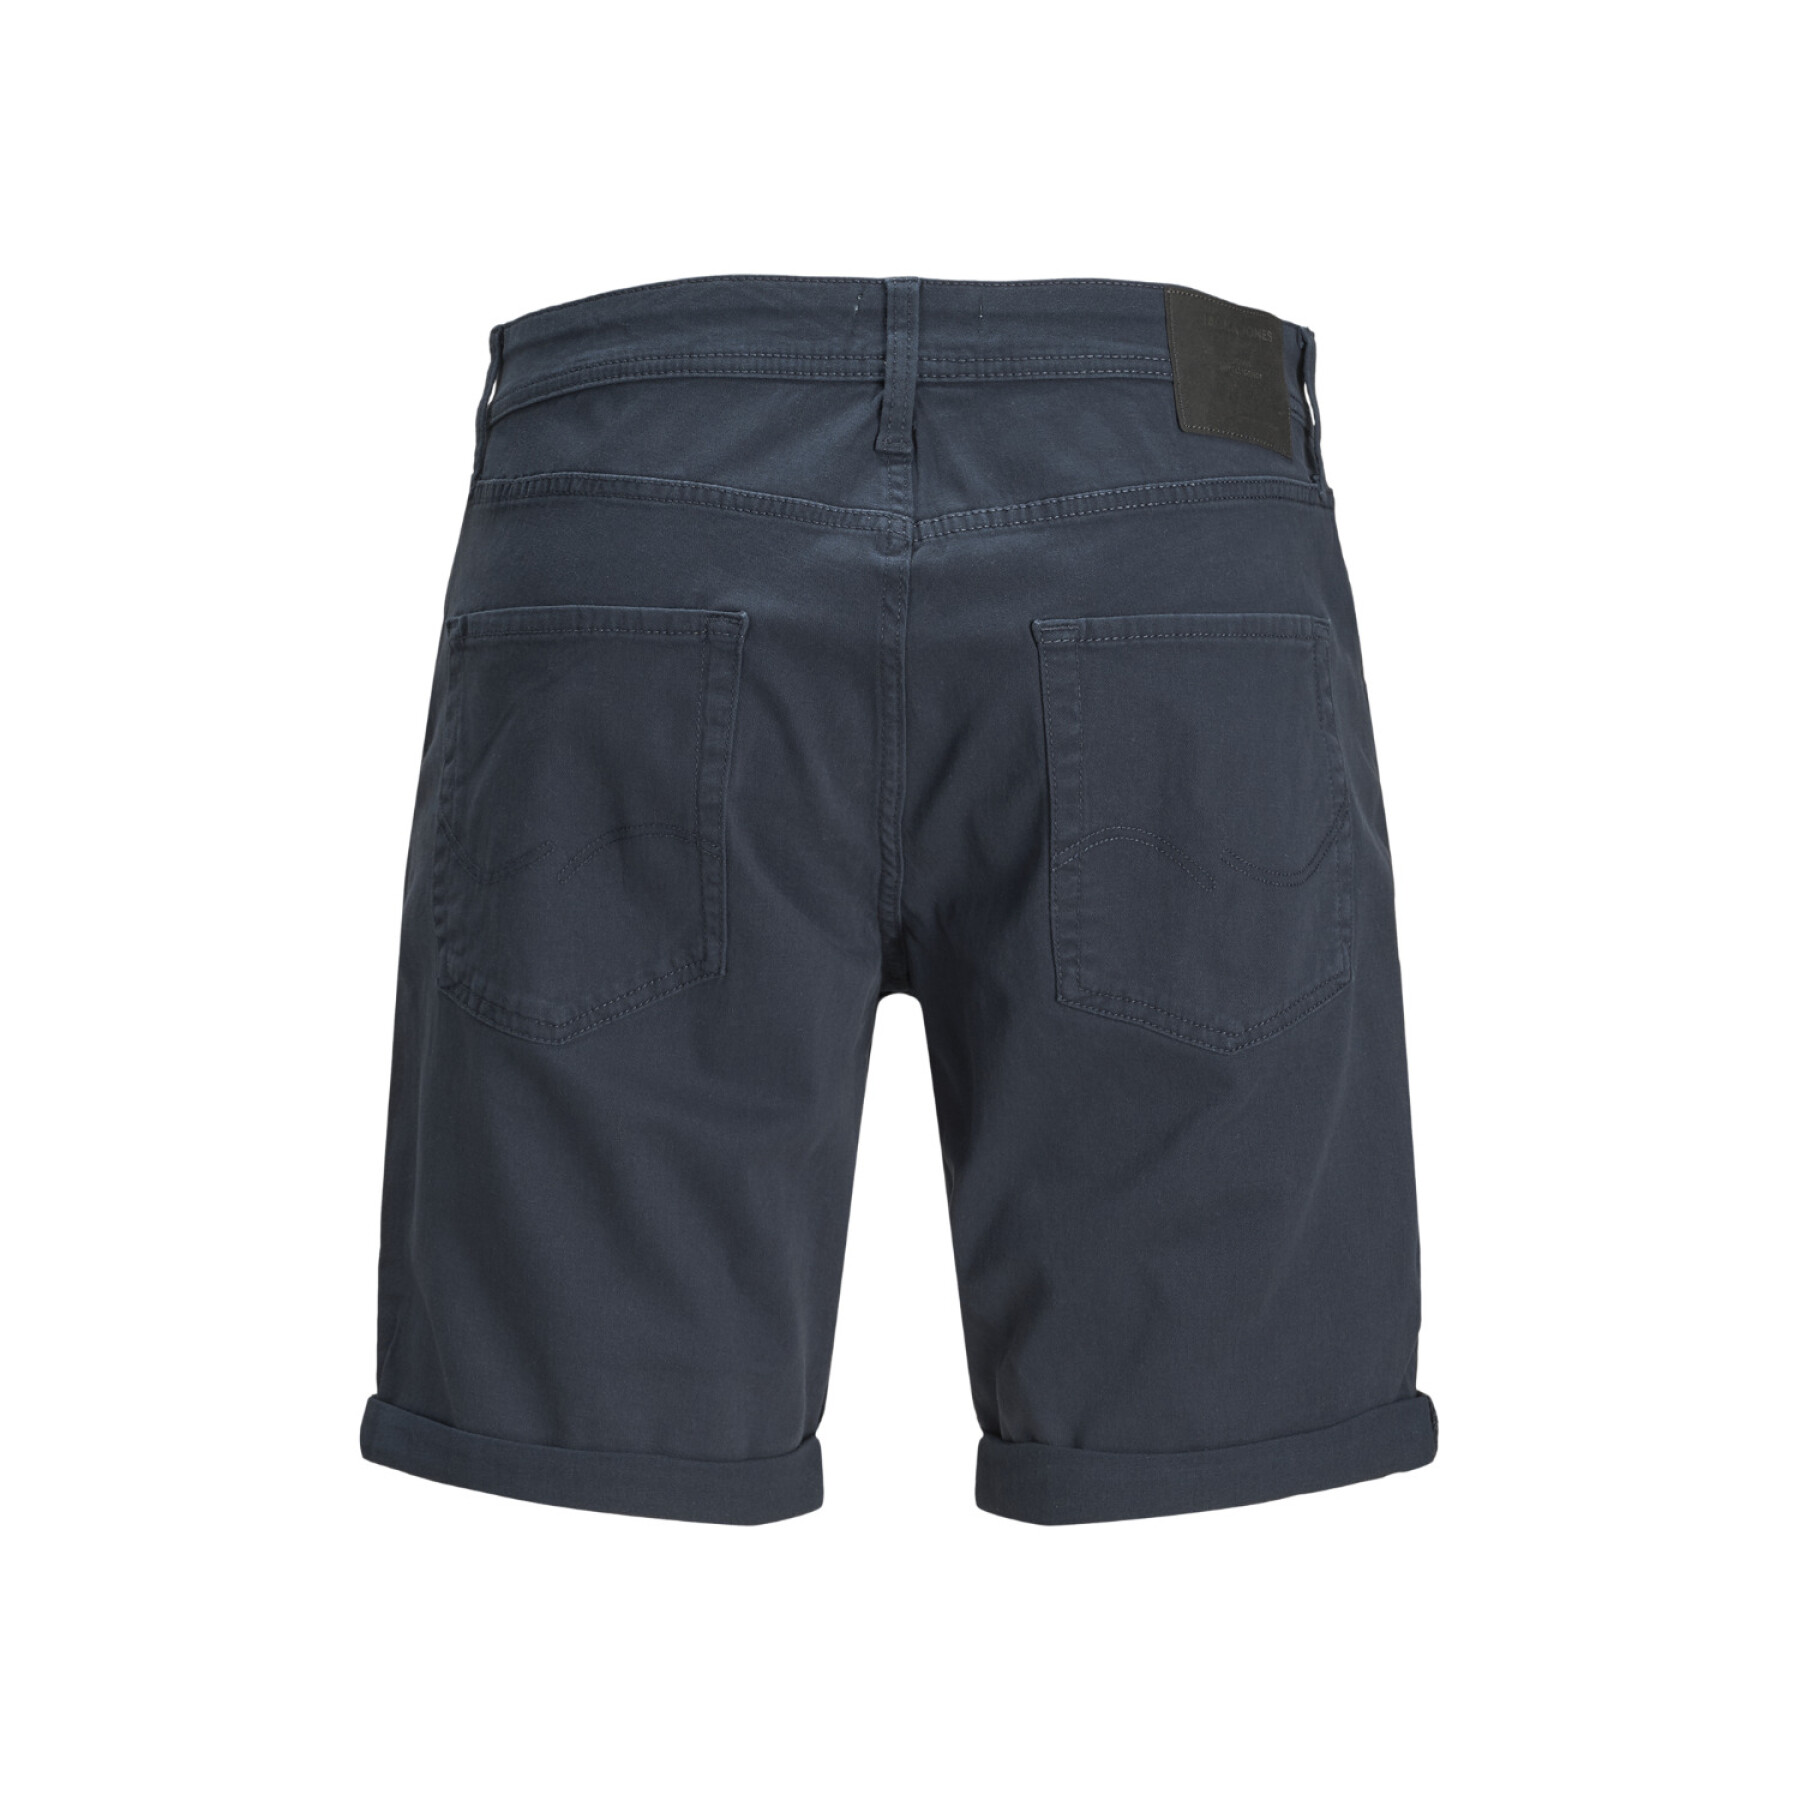 Bermuda shorts for children Jack & Jones Strick Original